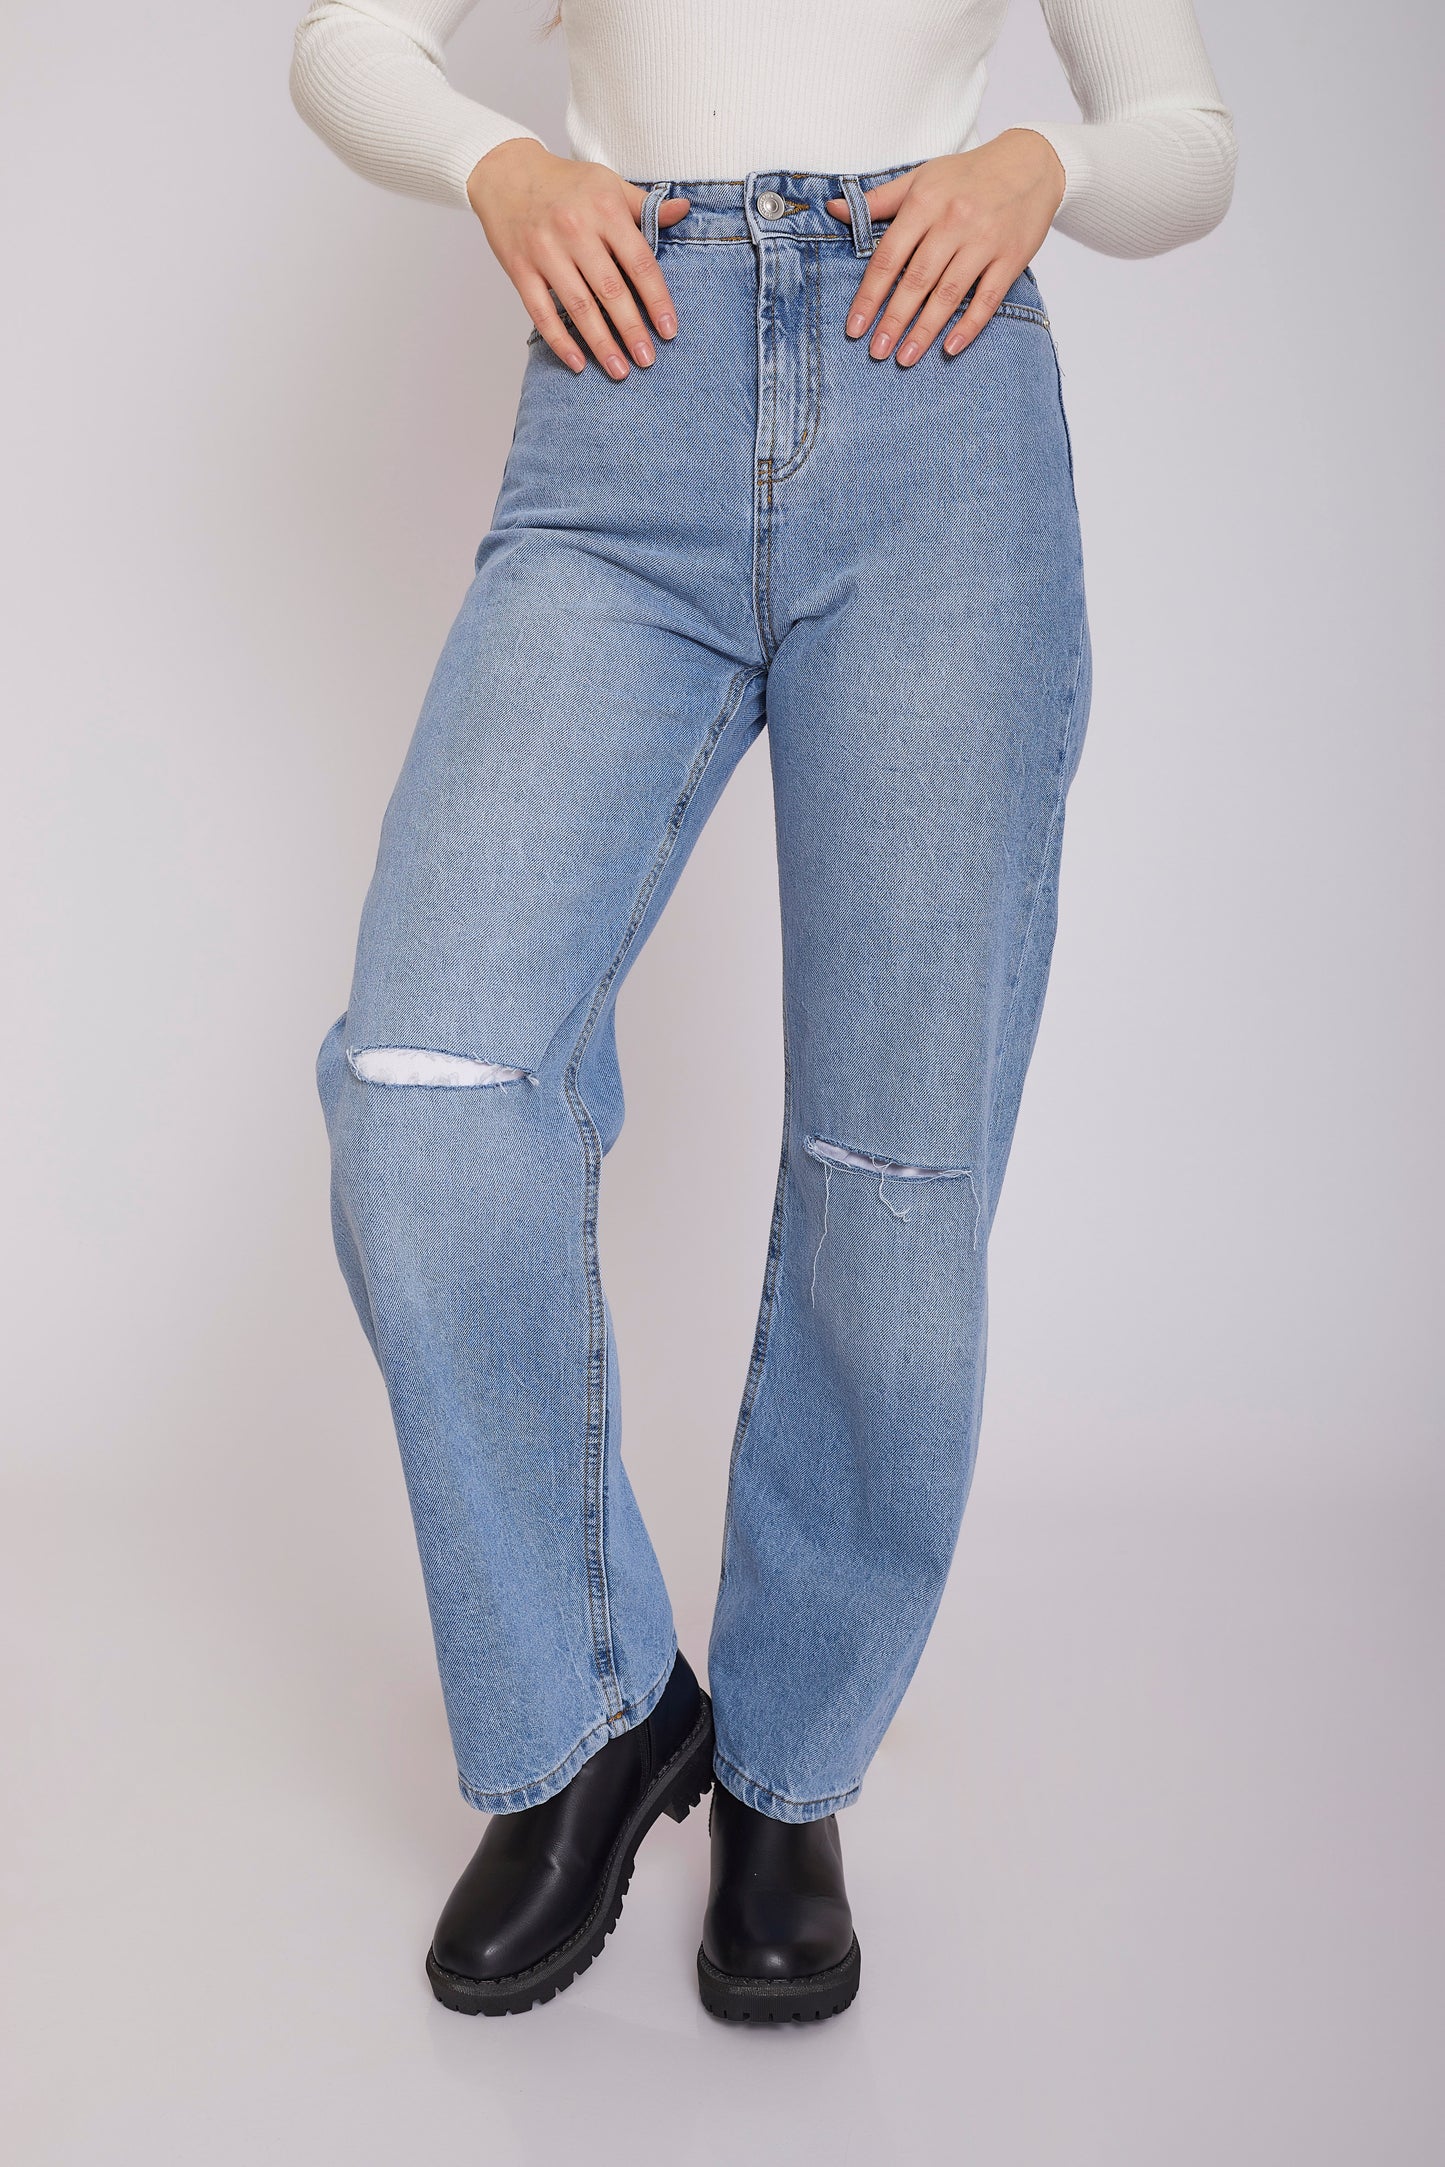 dj wide-leg ripped jeans - light blue